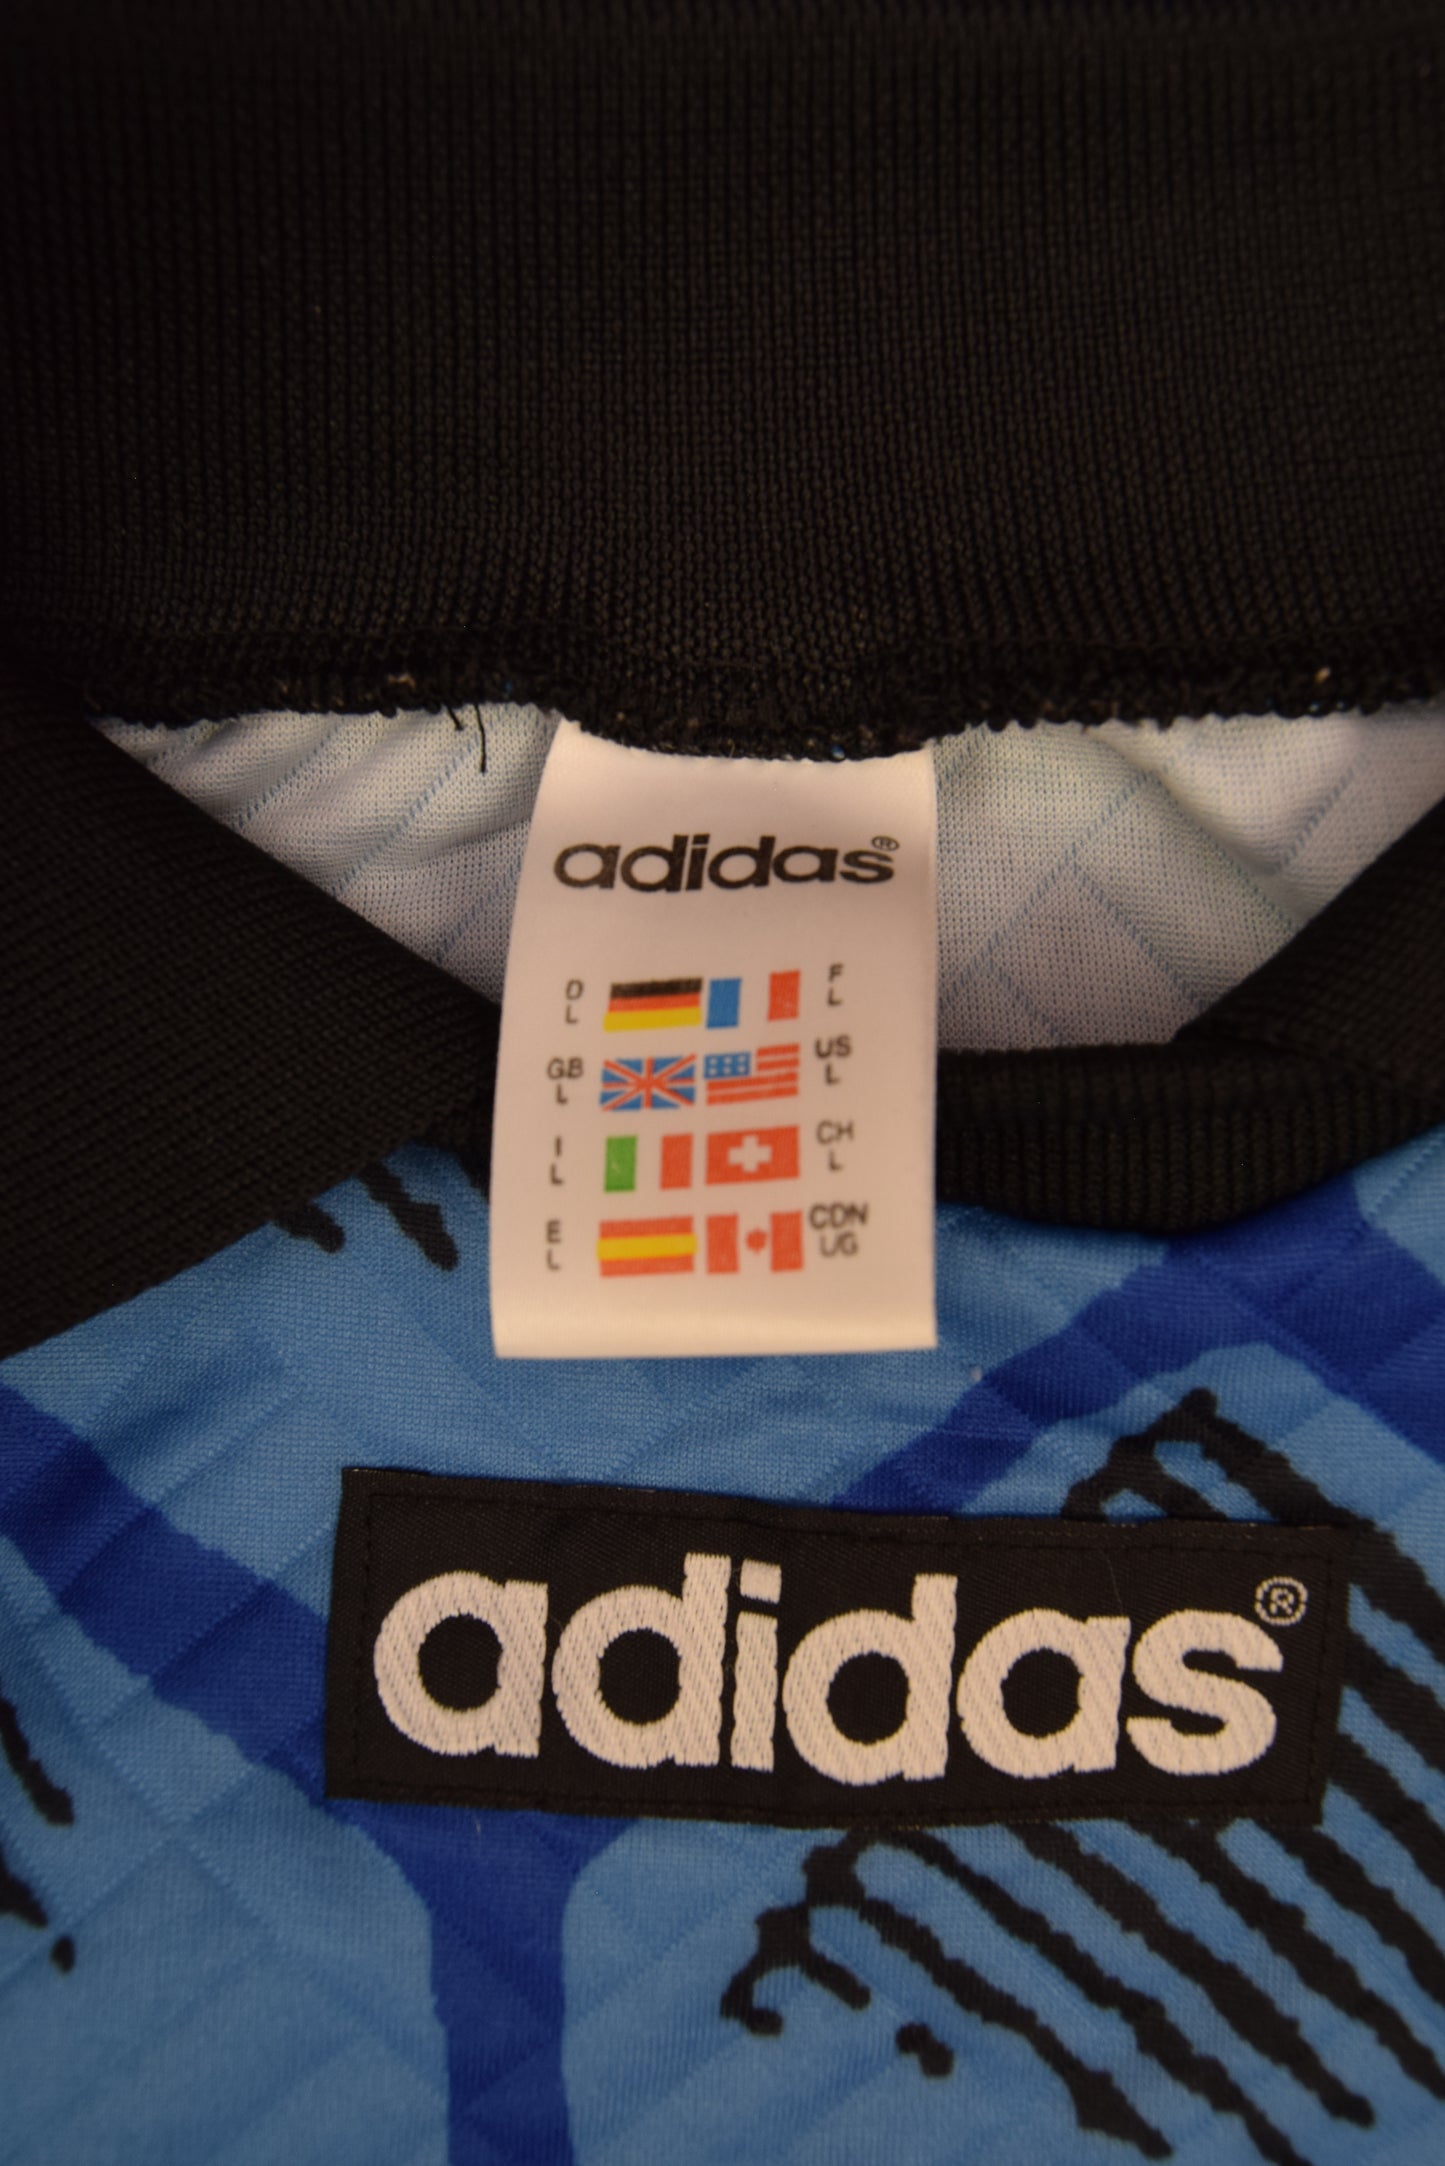 Oliver Kahn Adidas 1996 1997 1998 Bayern Munchen GK Goalkeeper Shirt Template #1 Size L Made in England Blue